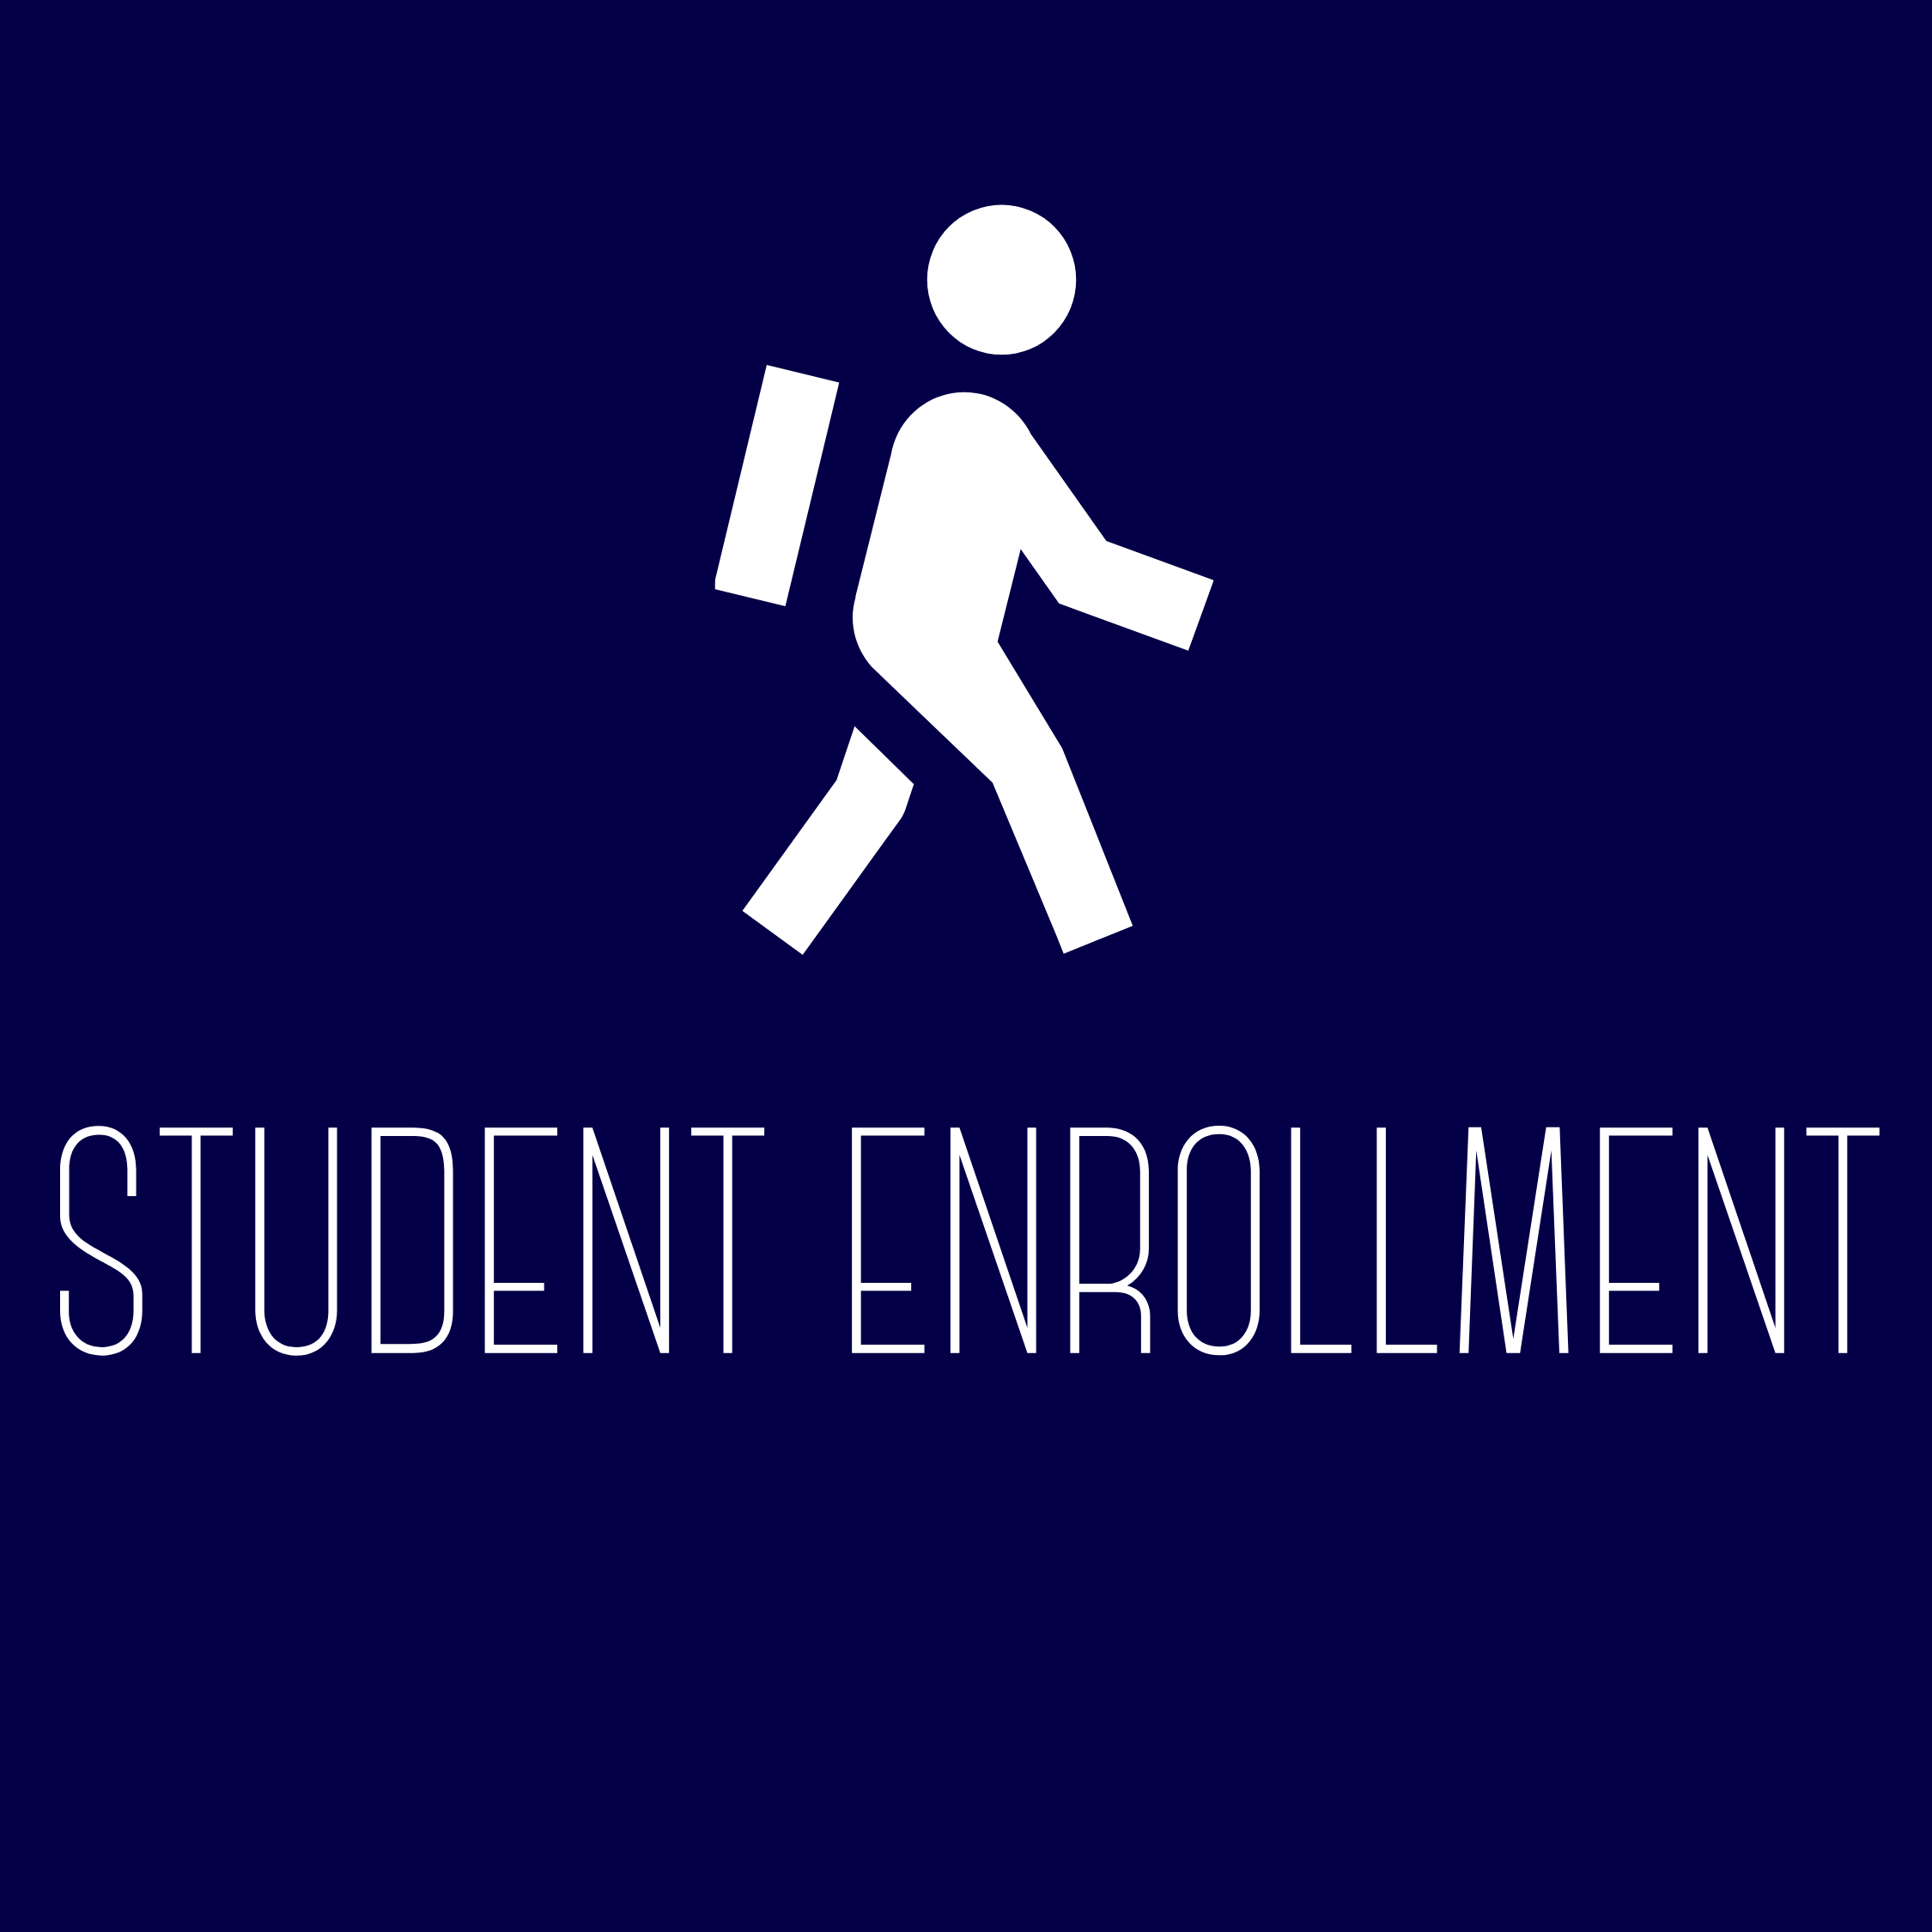 Student Enrollment